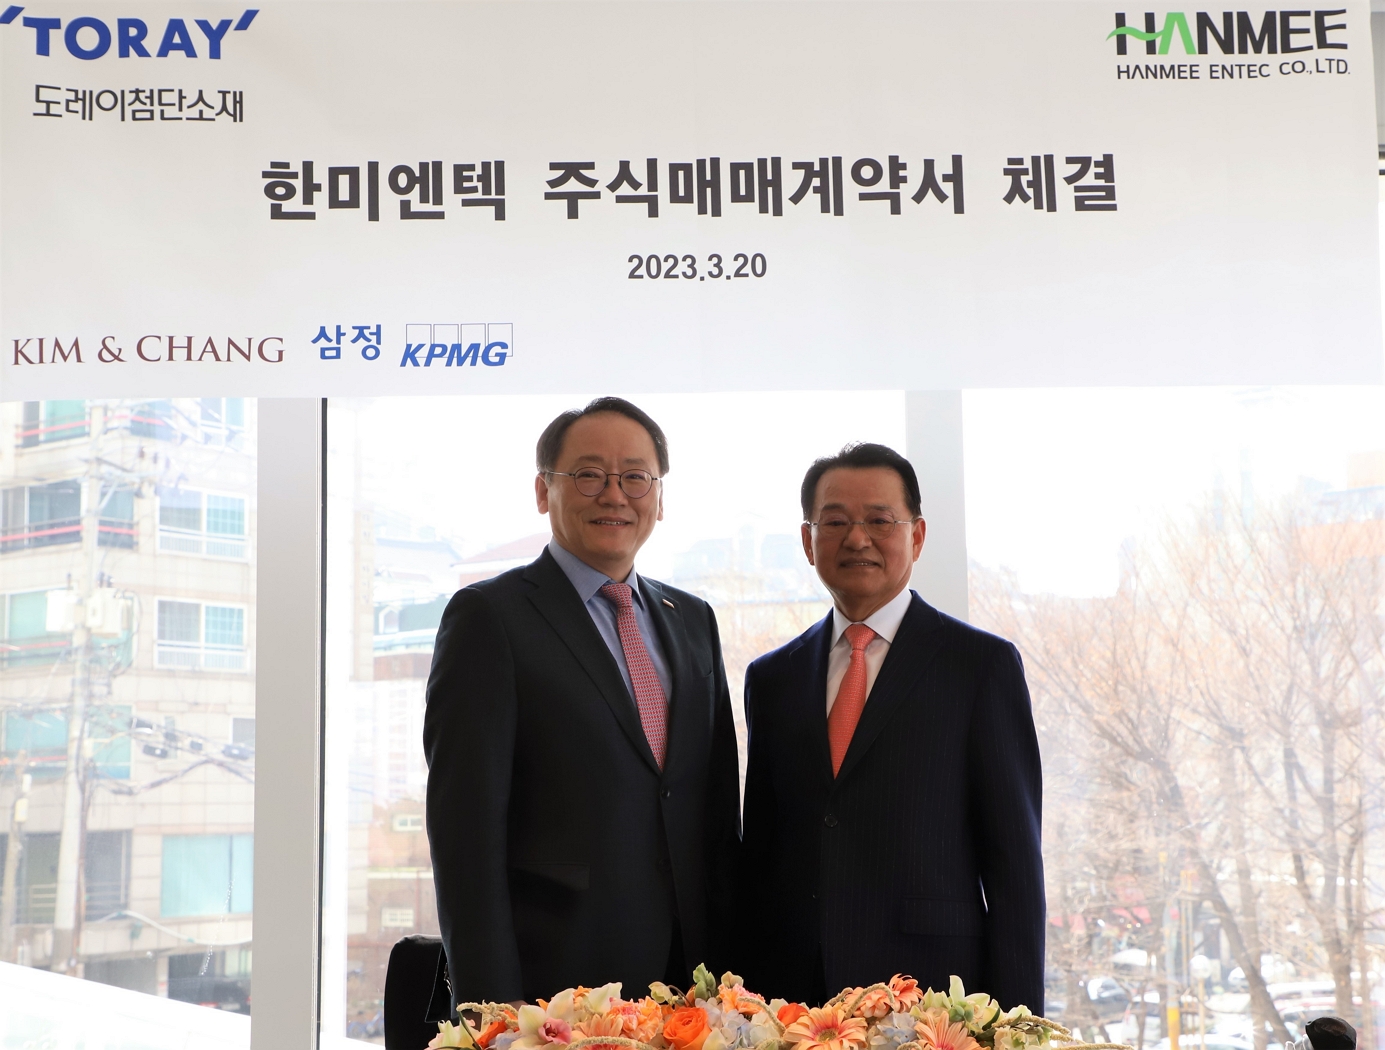 Toray Advanced Materials Korea acquires 'Hanmi Entec,' the Industry's longest-running water treatment O&M Company